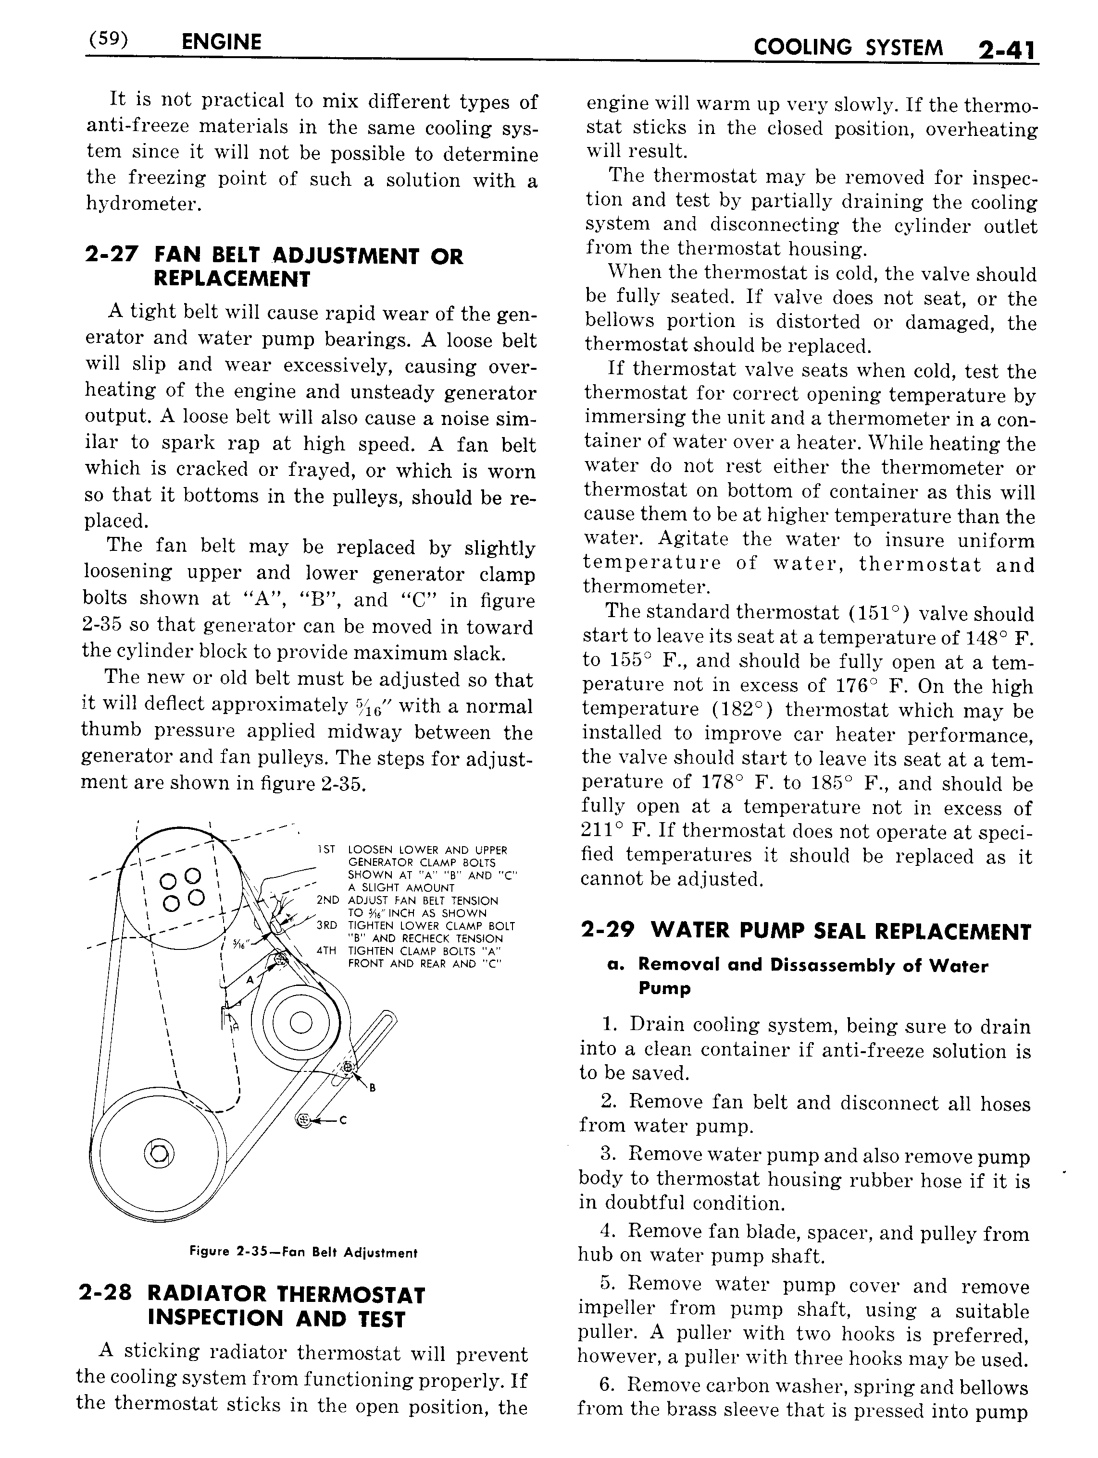 n_03 1951 Buick Shop Manual - Engine-041-041.jpg